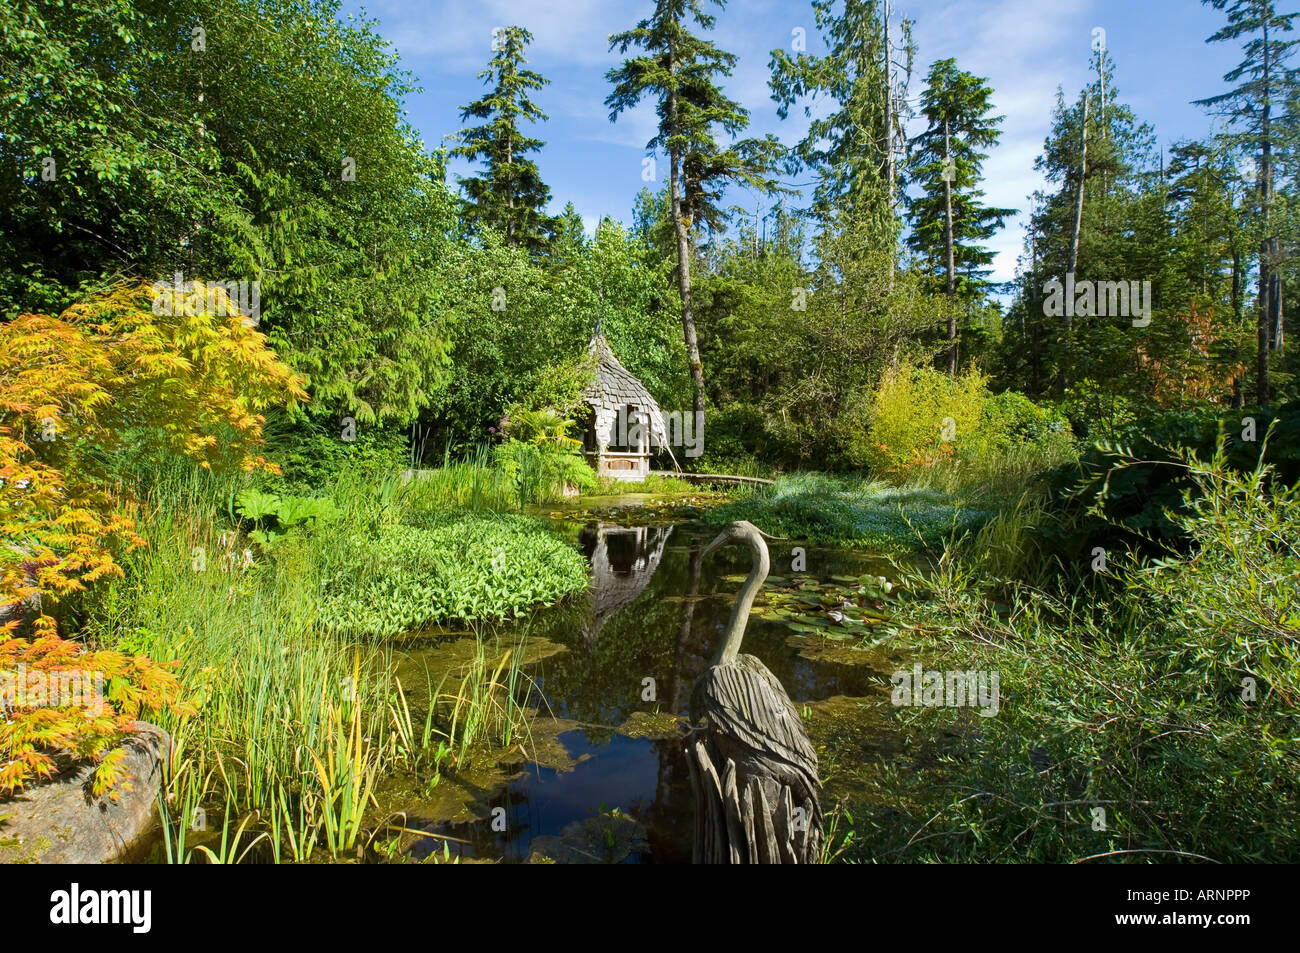 Tofino Botanical Gardens Seerosenteich mit Holz-Skulptur, Vancouver Island, British Columbia, Kanada. Stockfoto